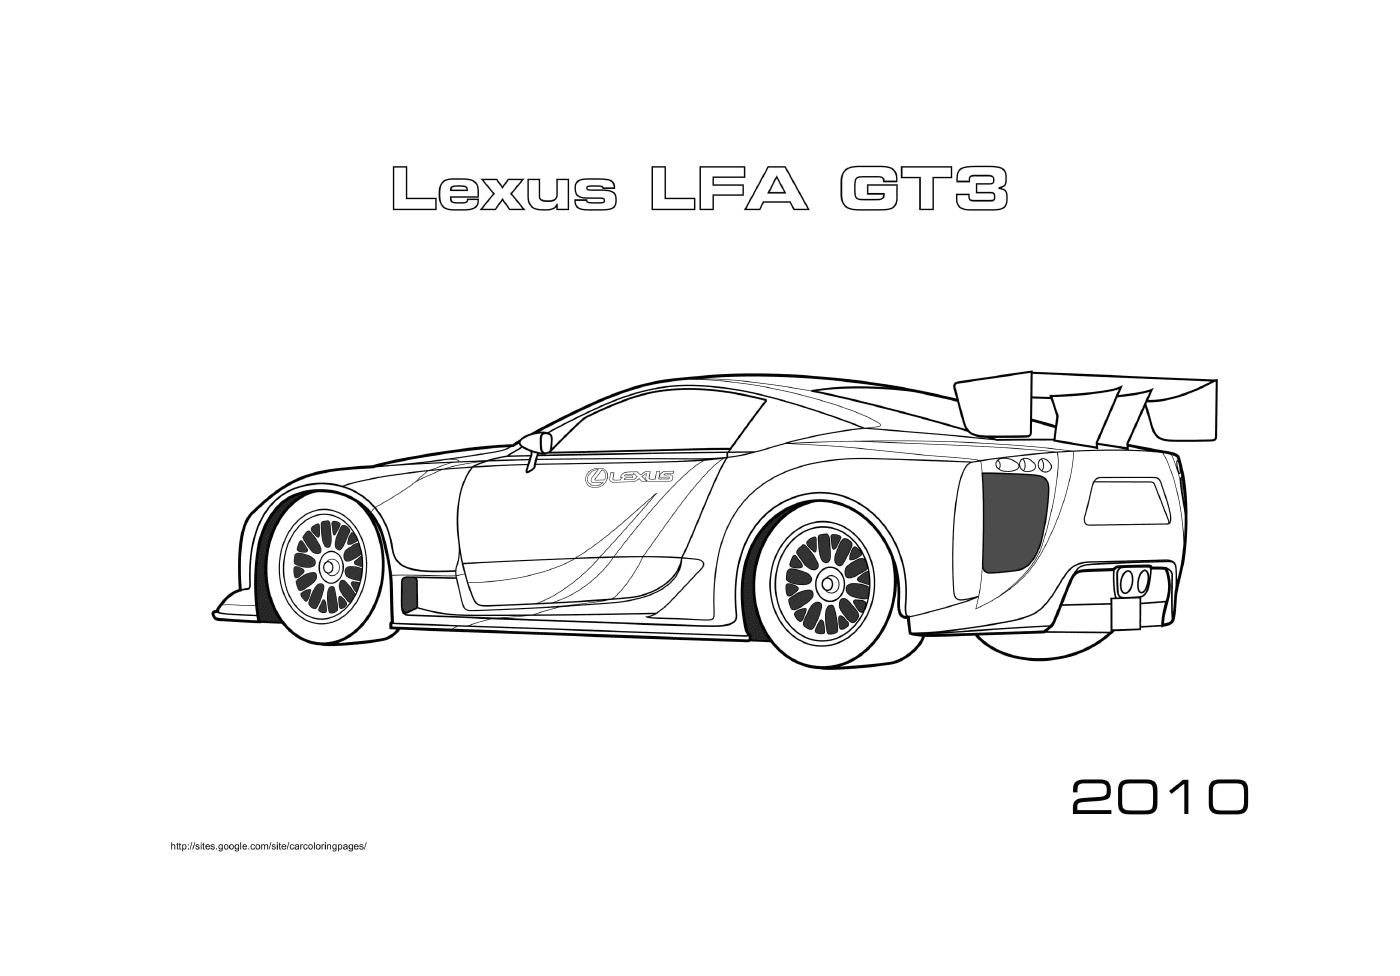  Lexus LFA GT3 coche de carreras 